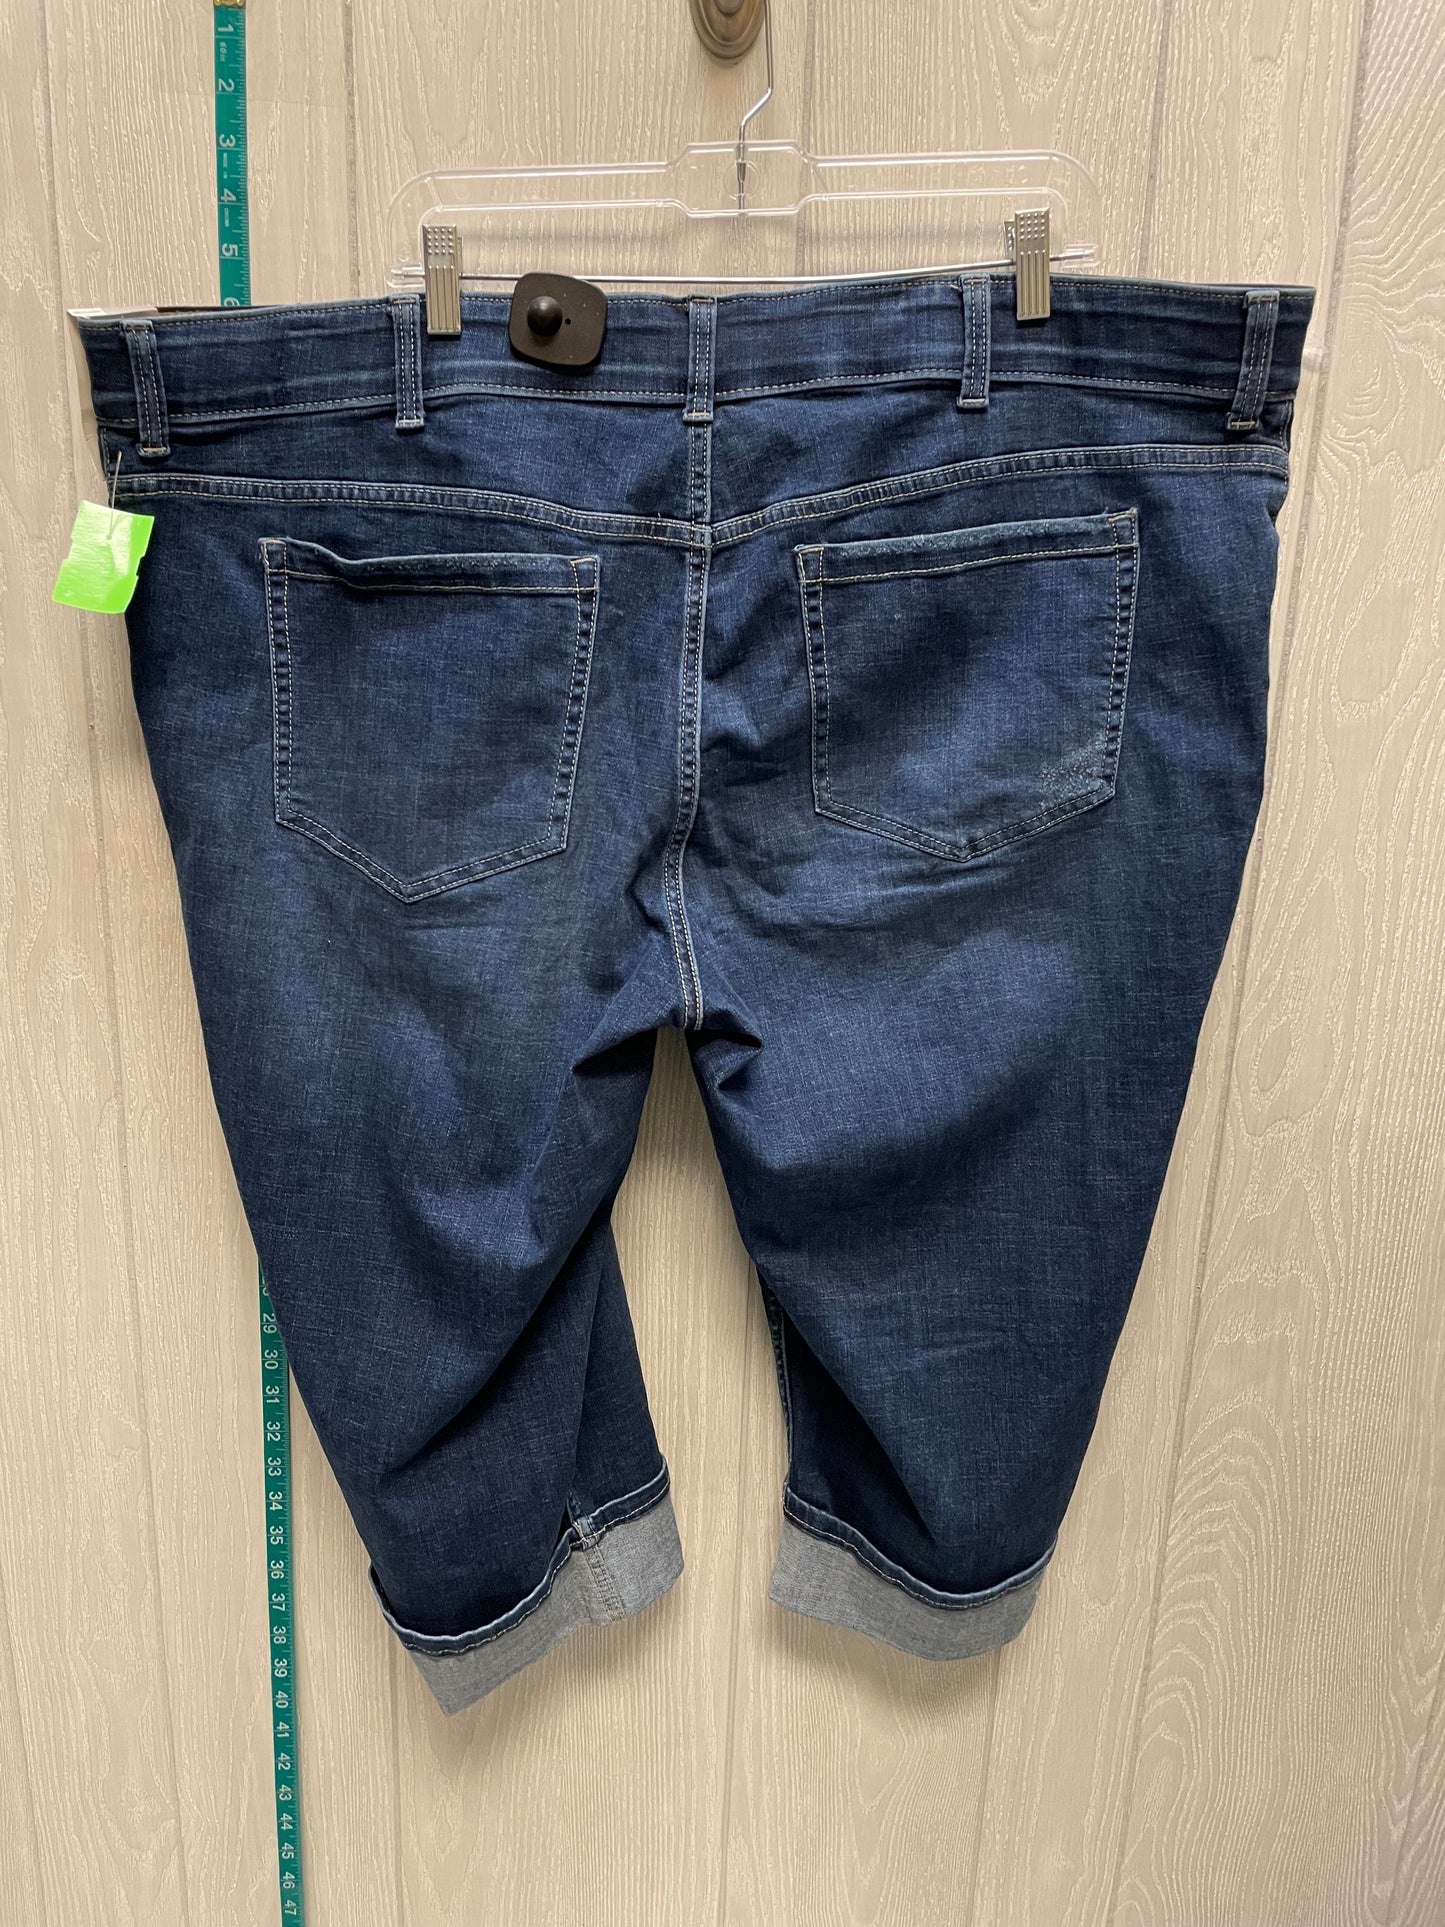 Blue Denim Jeans Boot Cut Torrid, Size 18